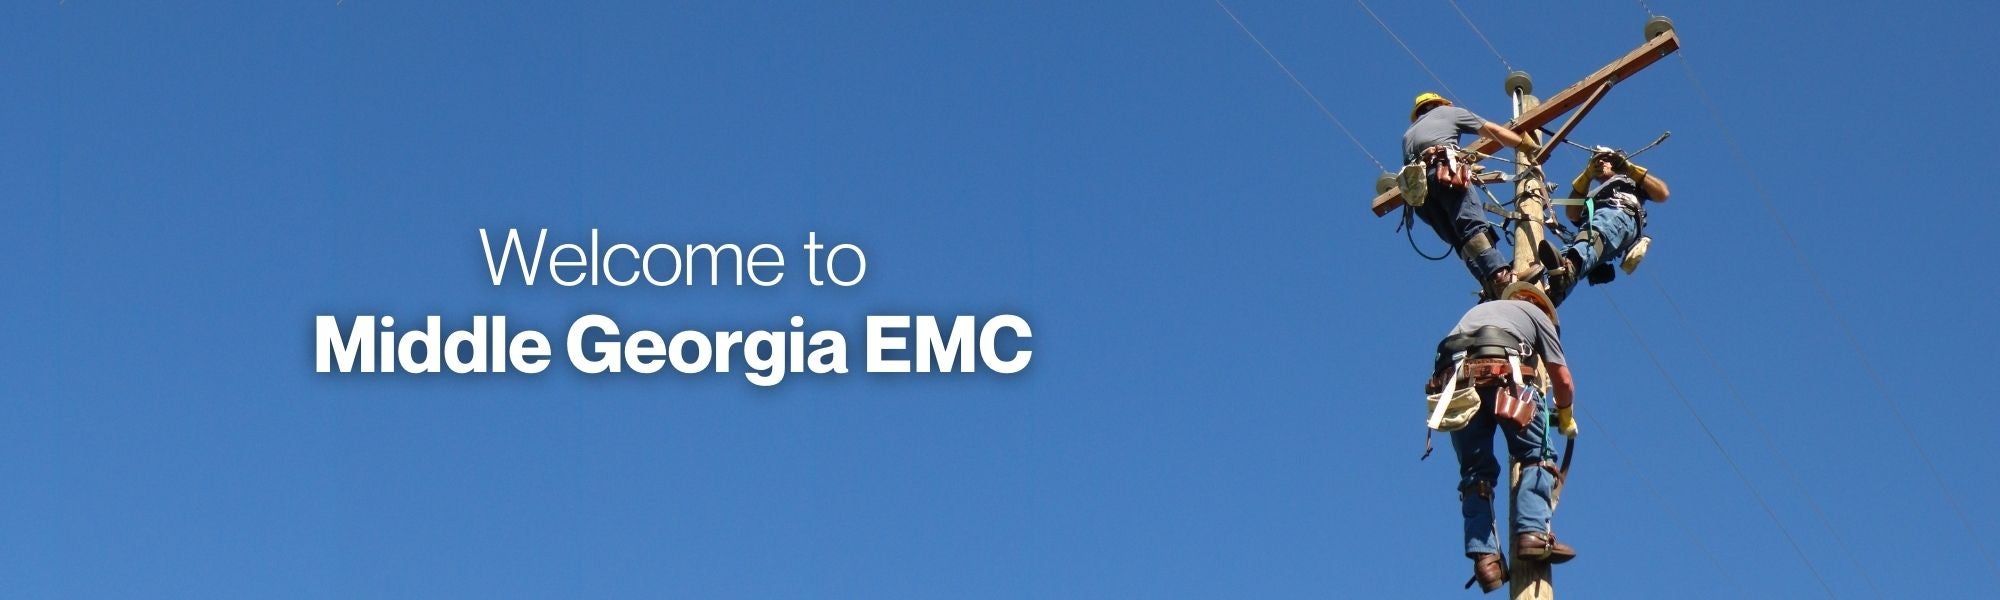 Welcome to Middle Georgia EMC